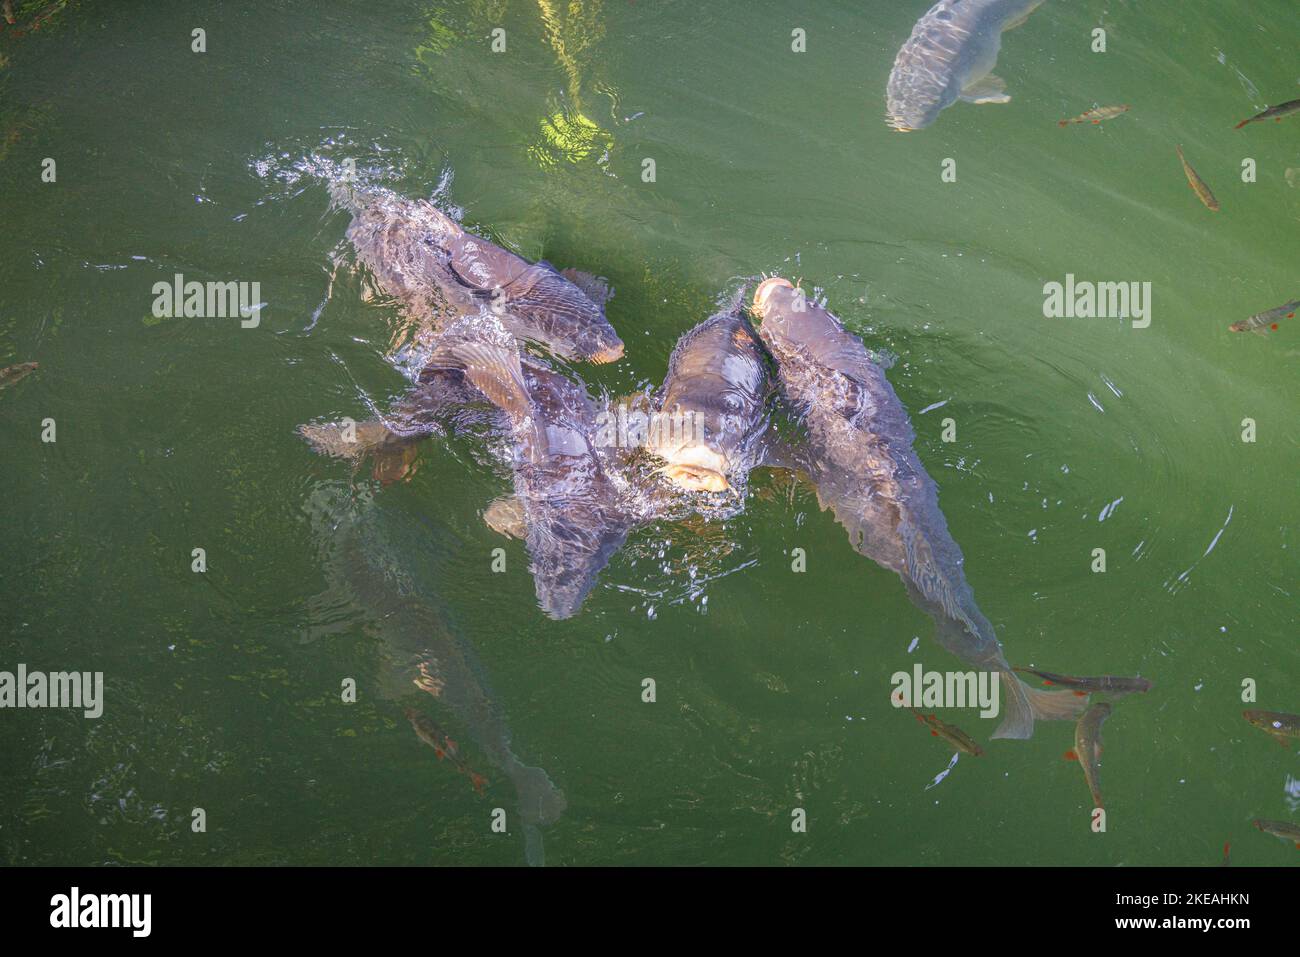 carp, common carp, European carp (Cyprinus carpio), large mirror carps in a small moor pond are fed by bathers, Germany, Bavaria, Kesselsee, Stock Photo